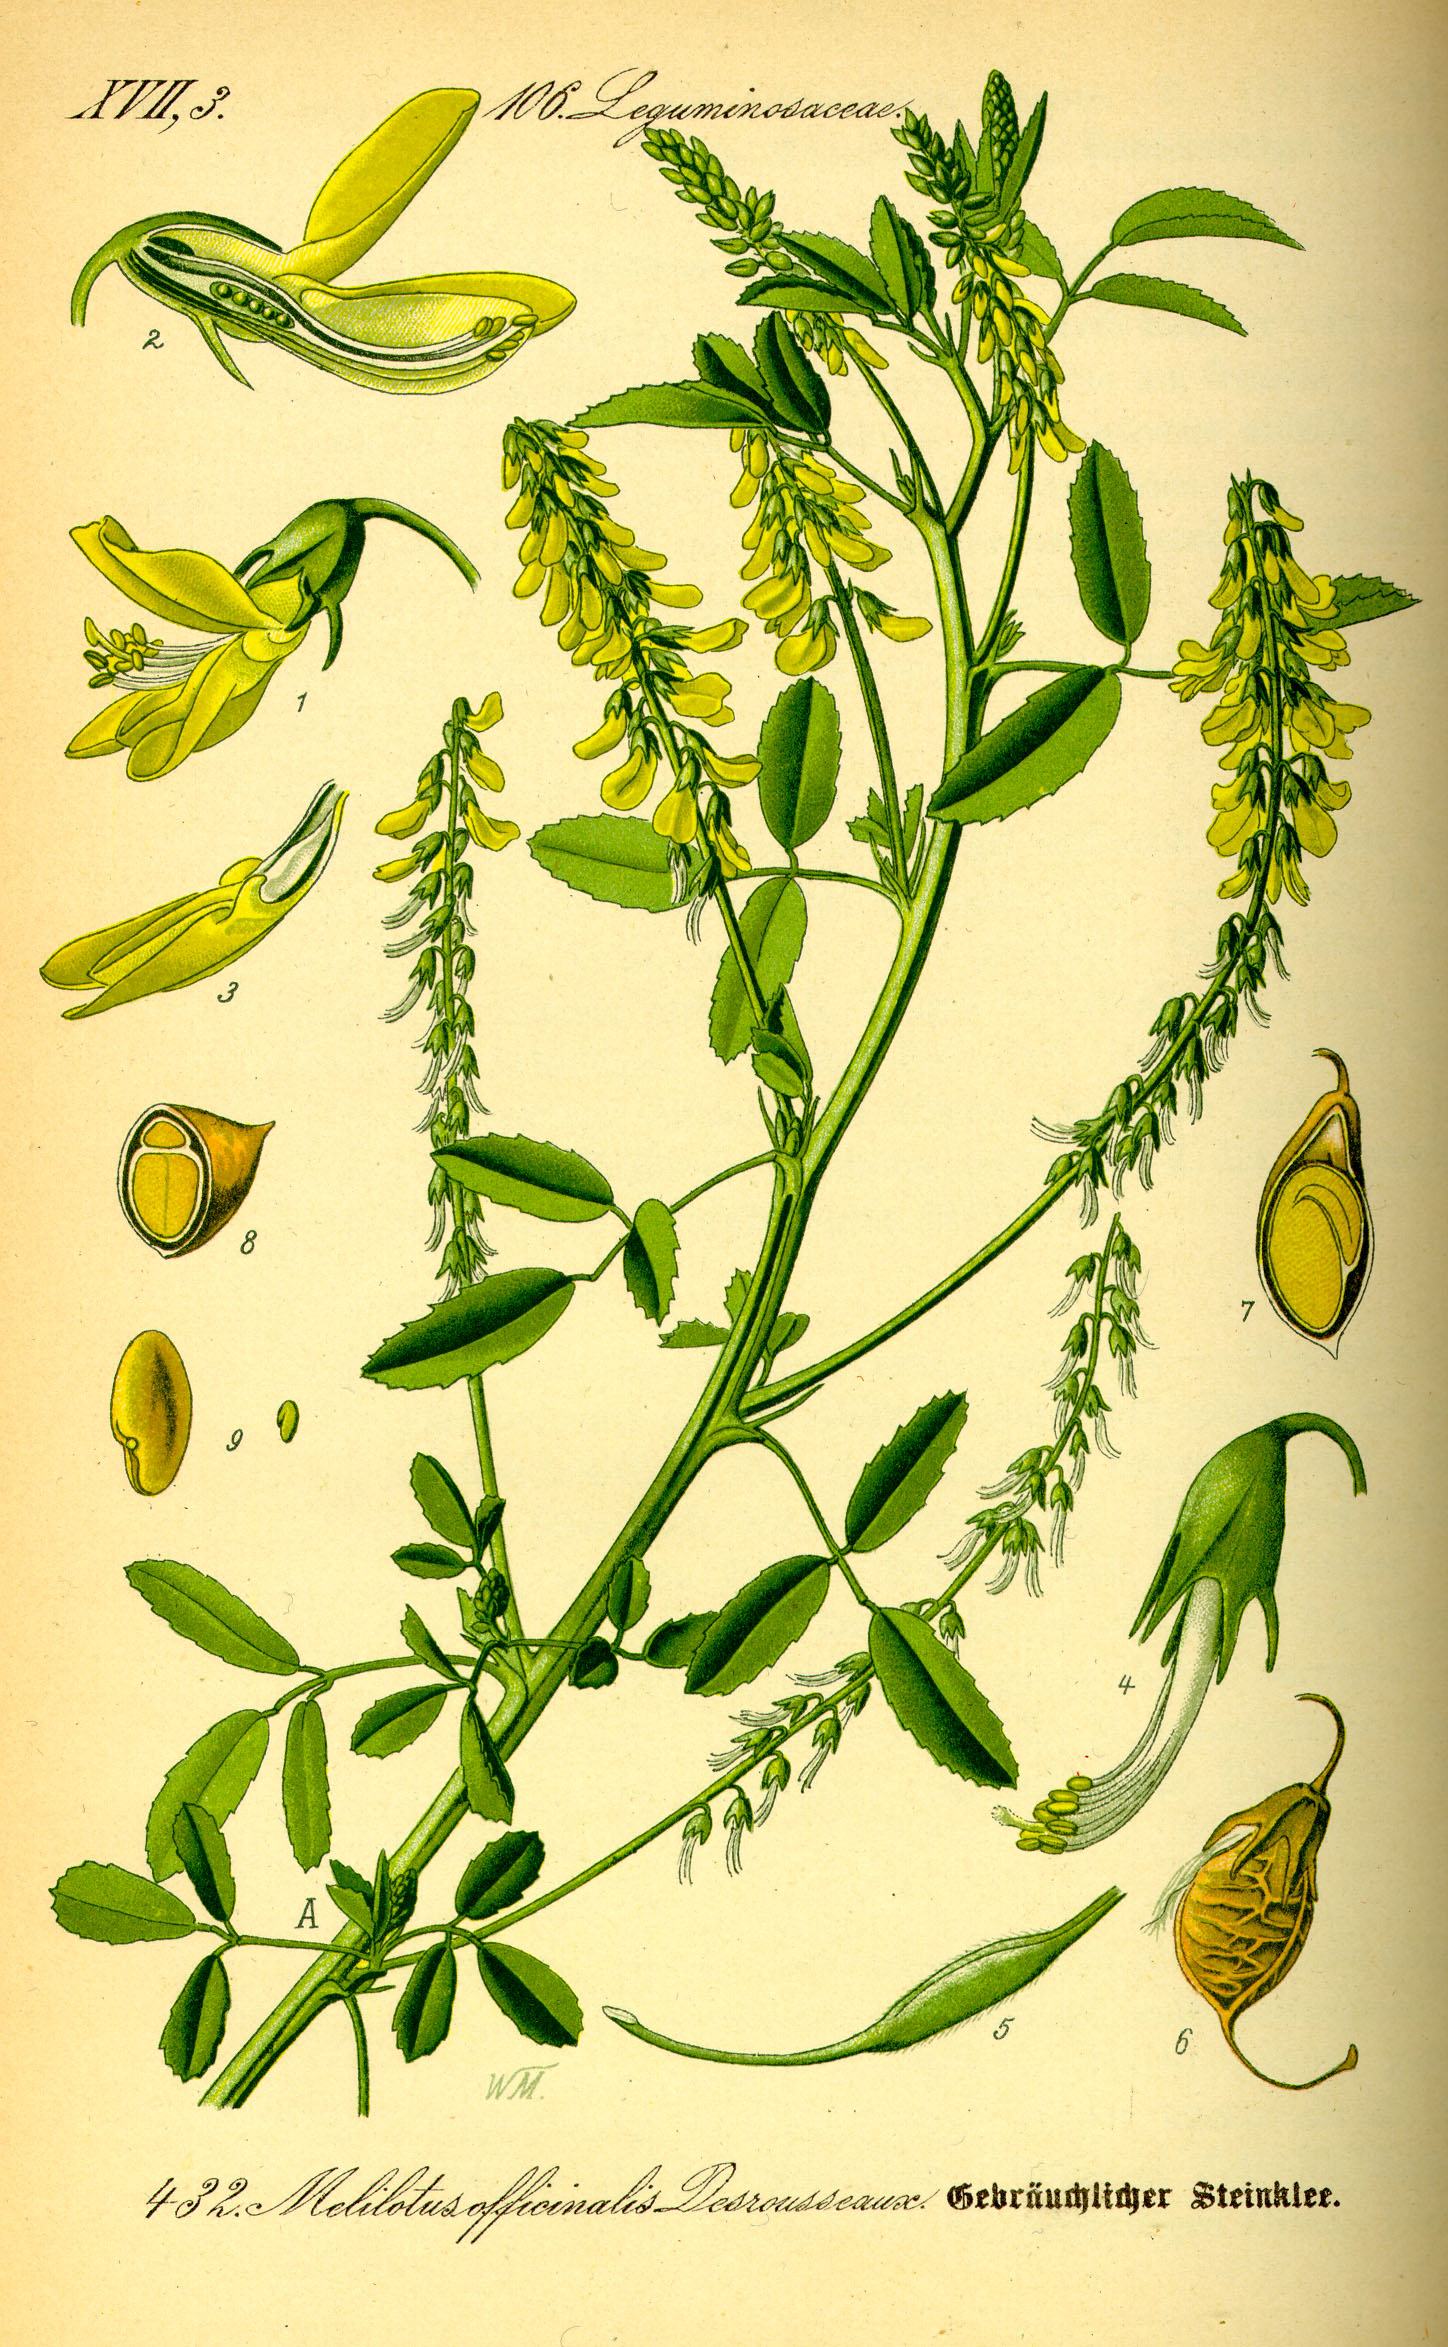 Yellow Sweet Clover botanical illustration circa 1885.